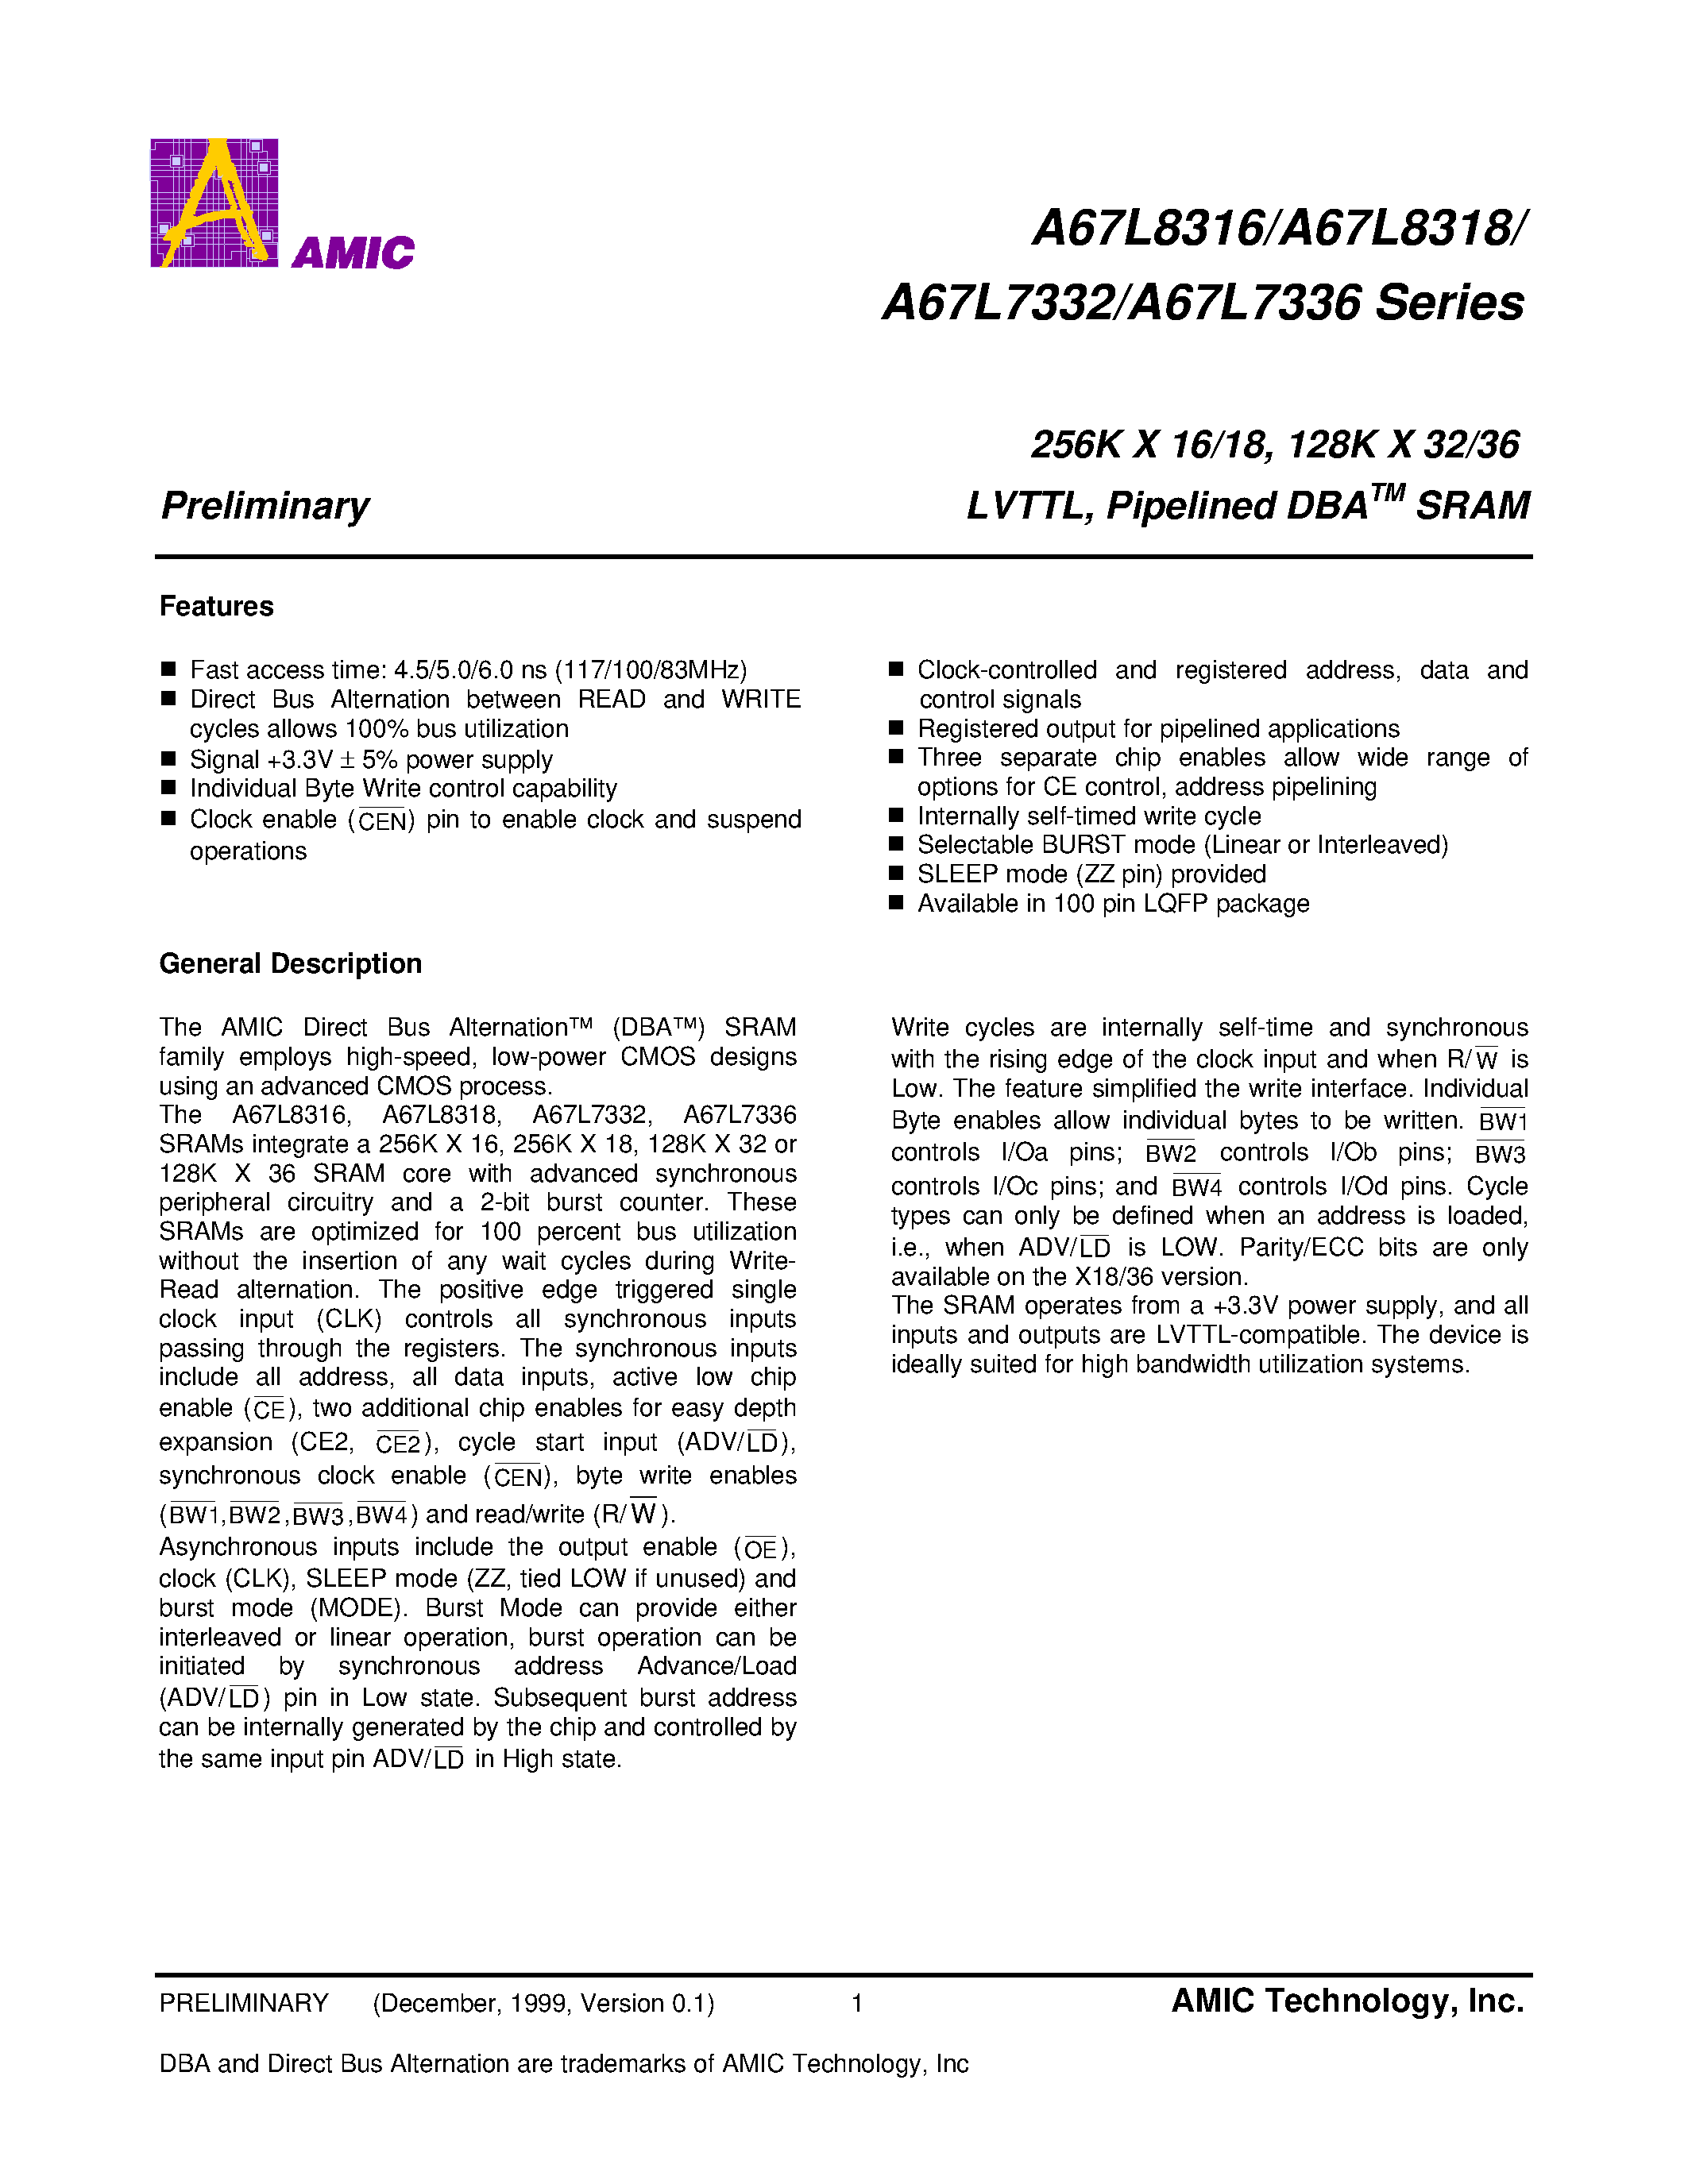 Datasheet A67L7332E-6 - 256K X 16/18/ 128K X 32/36 LVTTL/ Pipelined DBA SRAM page 2